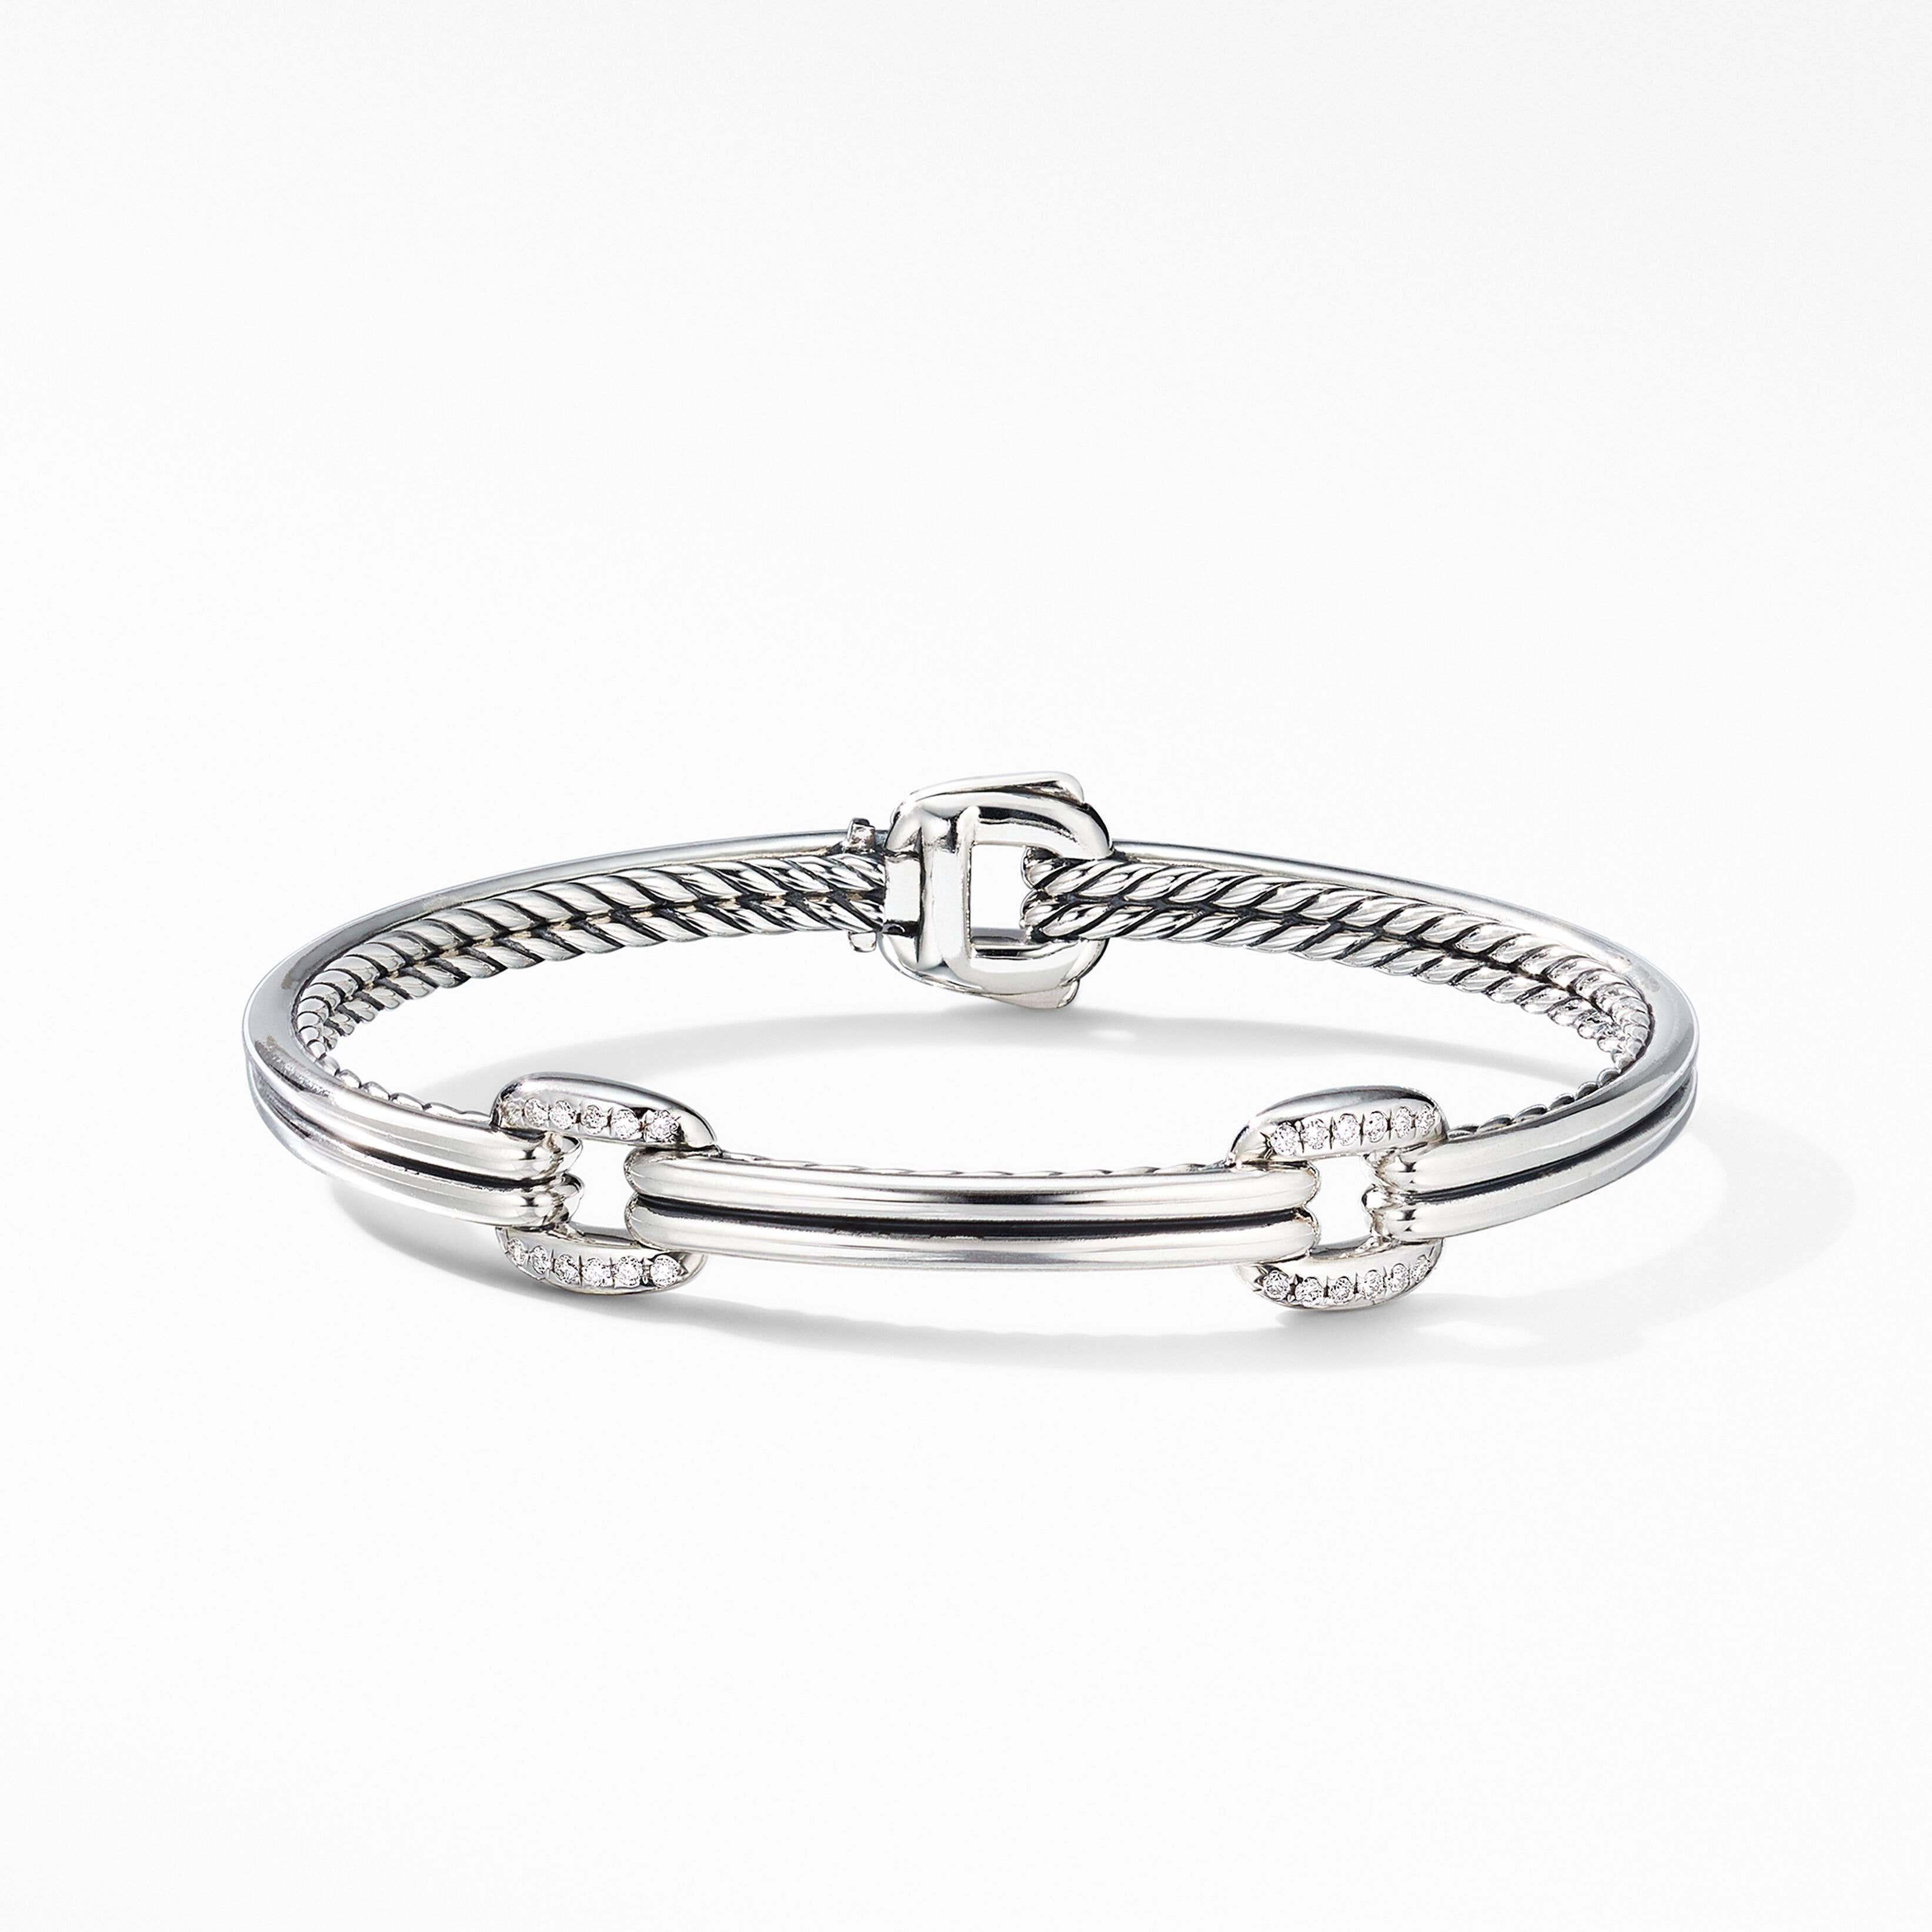 Thoroughbred Double Link Bracelet with Pavé Diamonds